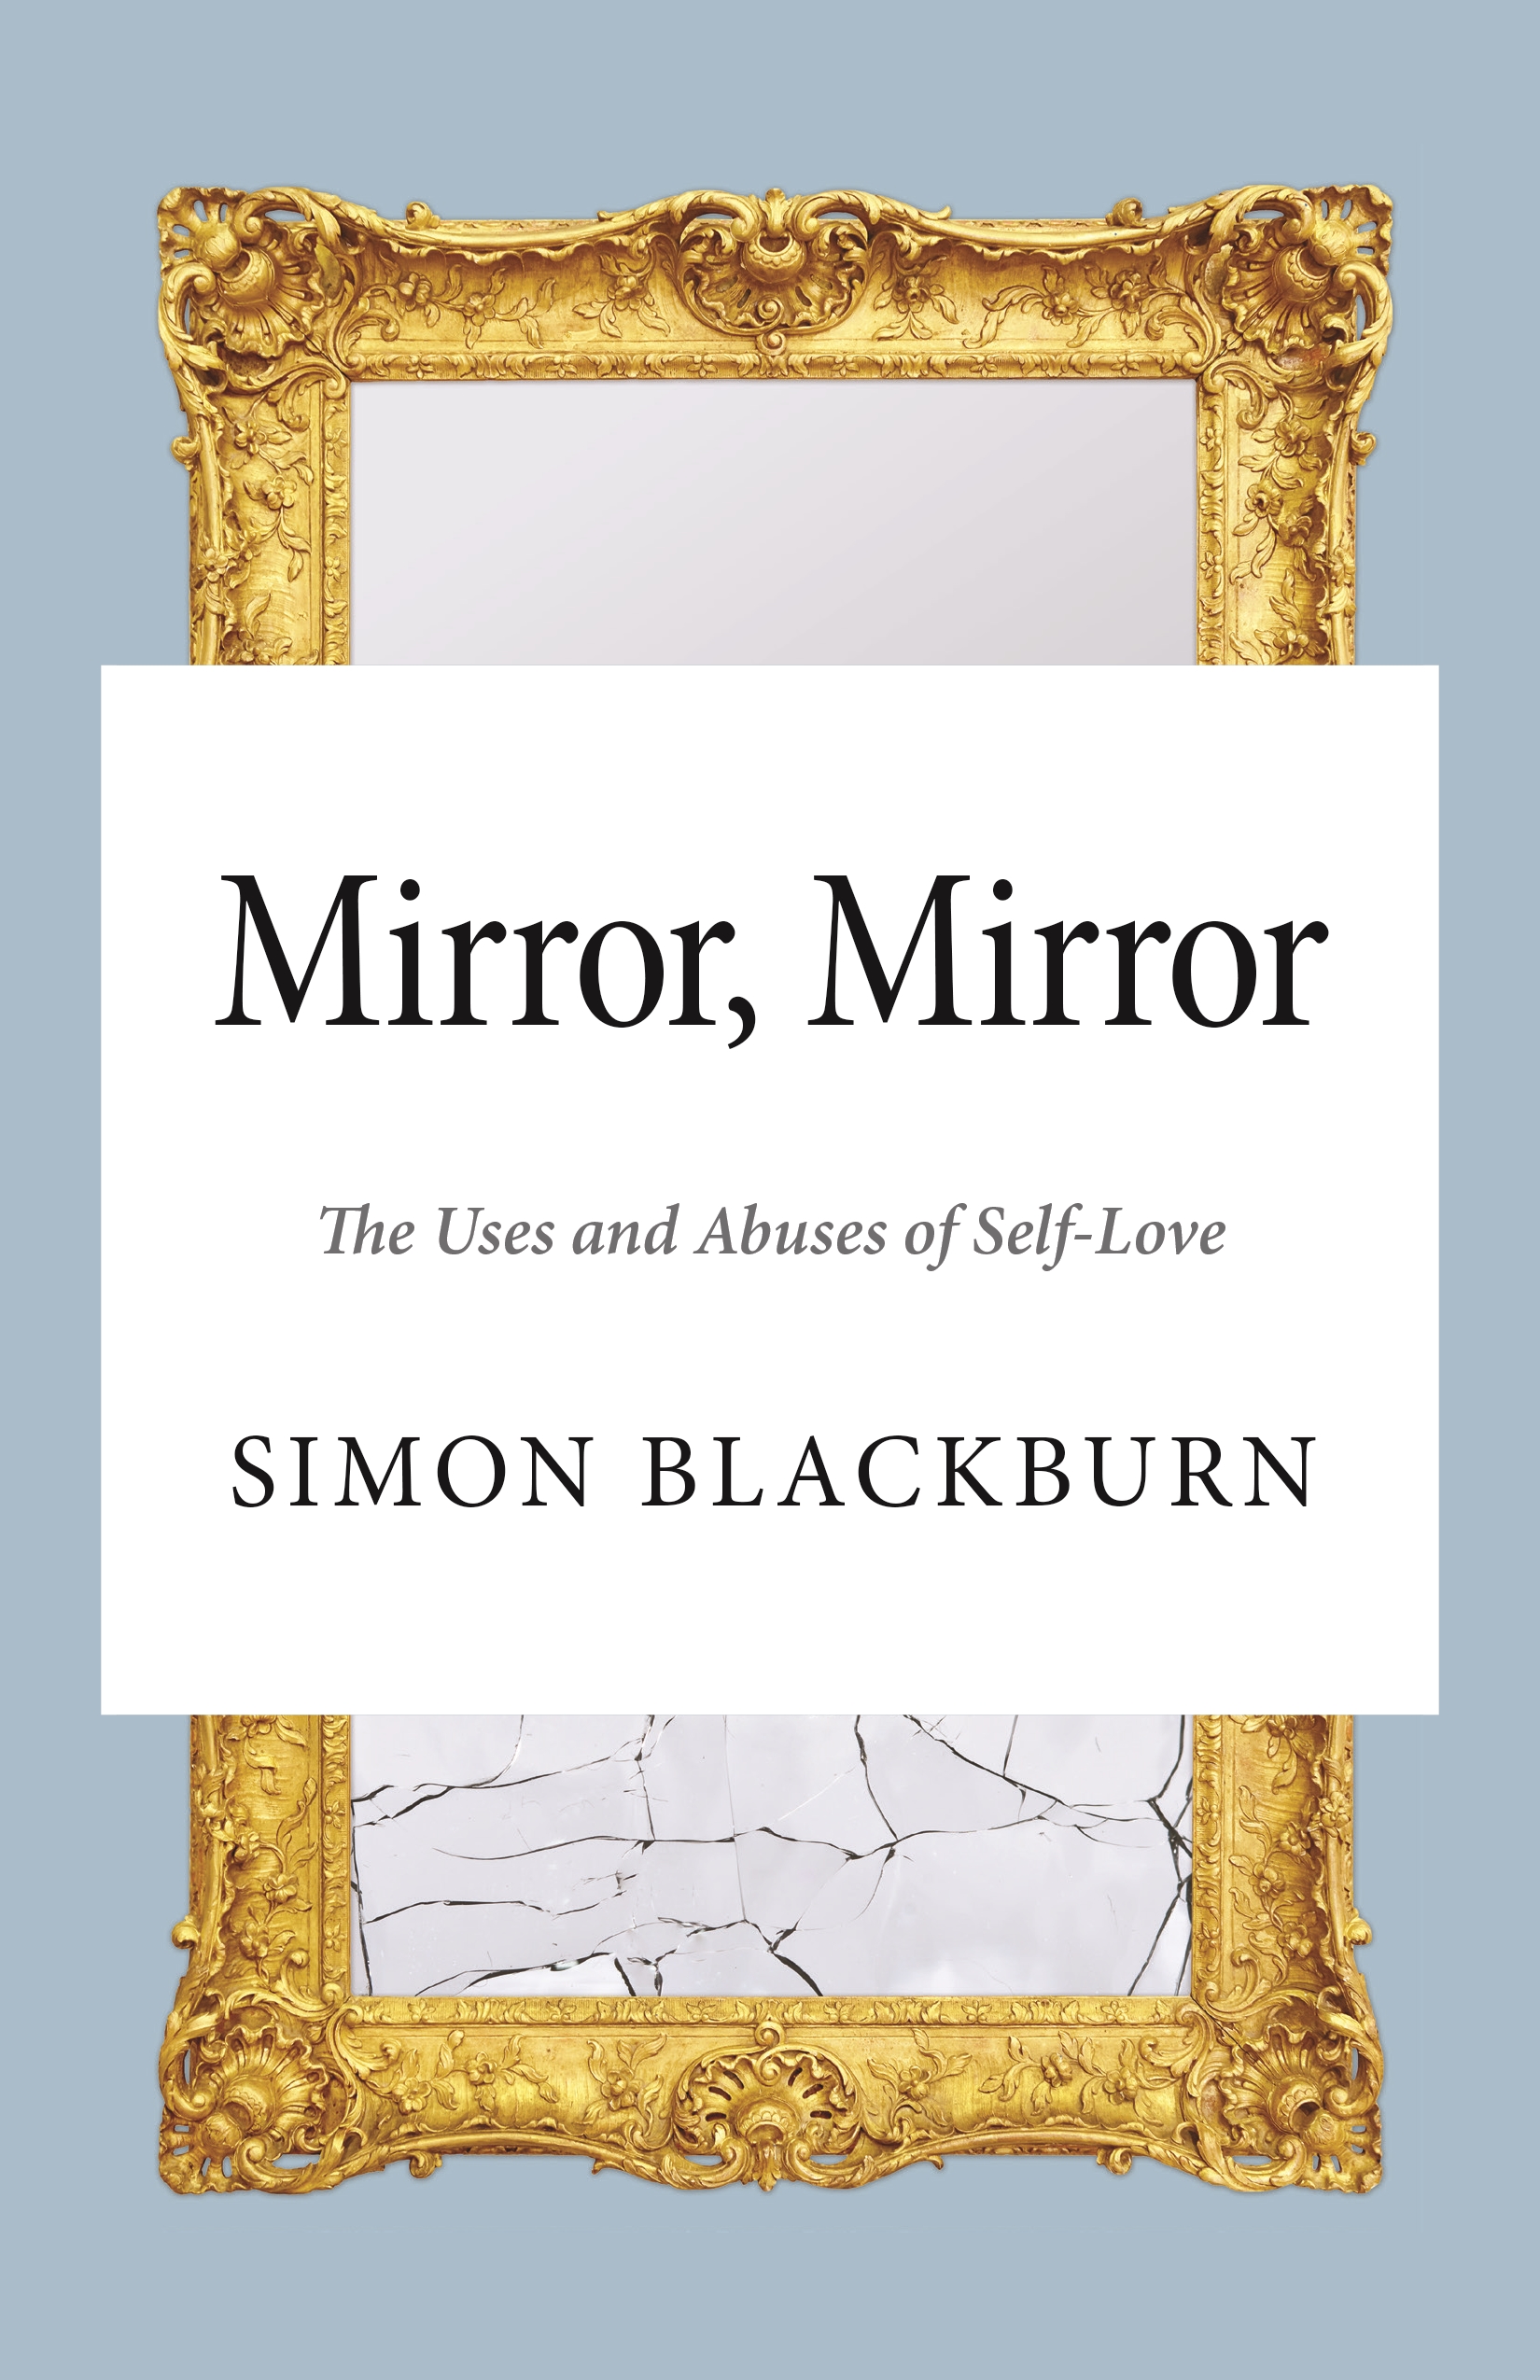 Mirror, Mirror by Simon Blackburn